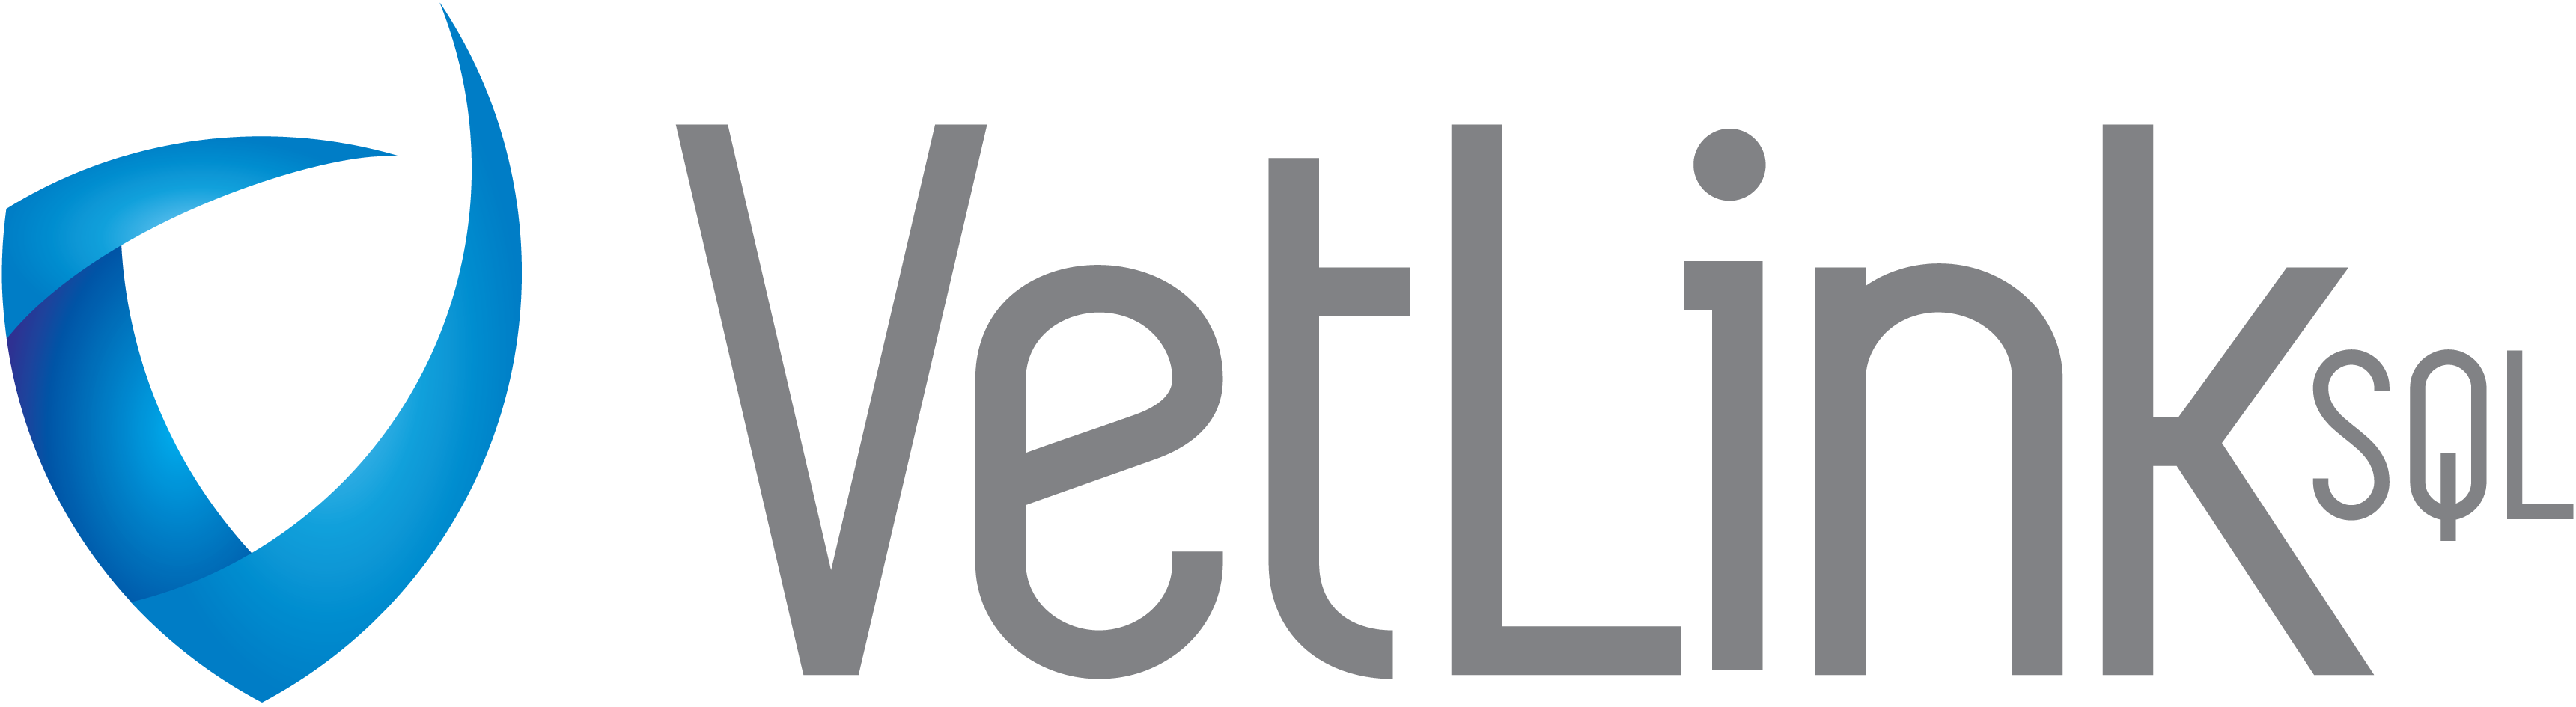 VetLink Right Aligned Logo